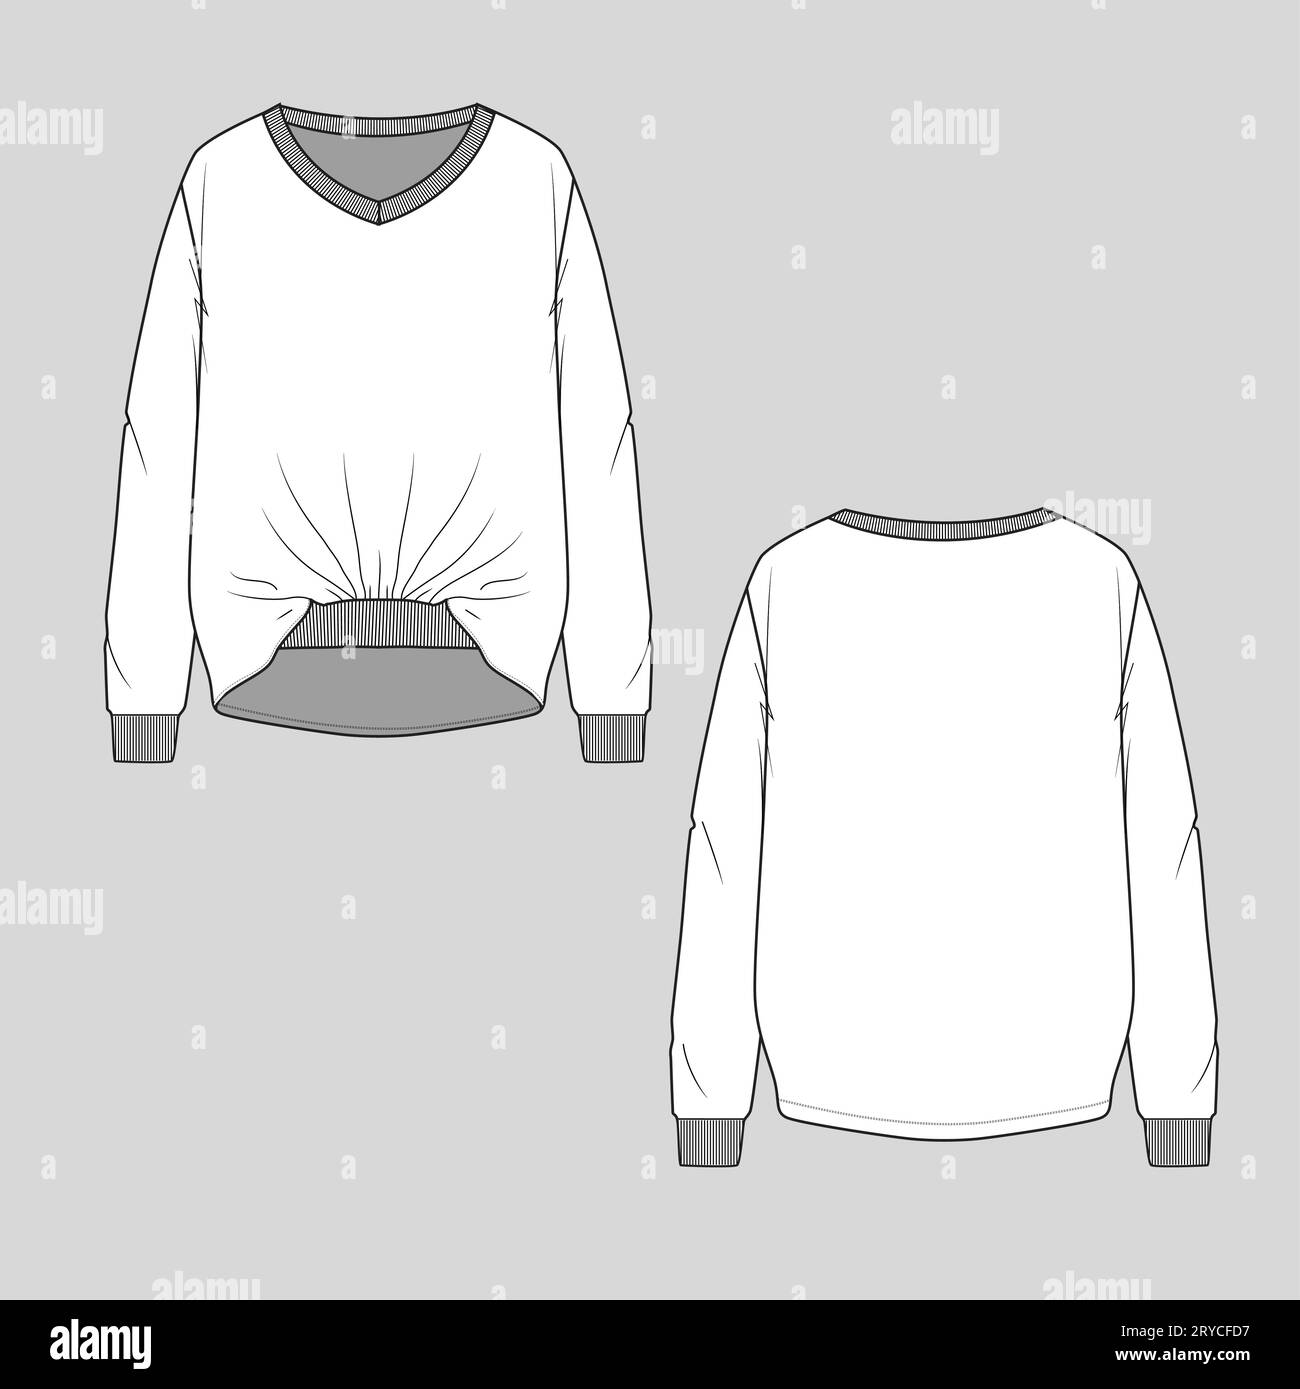 Damen Saum Mode Sweatshirt Bündchen Ripp mit Raffung Saum langer Ärmel Bündchen V-Ausschnitt cad-Modell flache Skizze technische Zeichenvorlage Stock Vektor